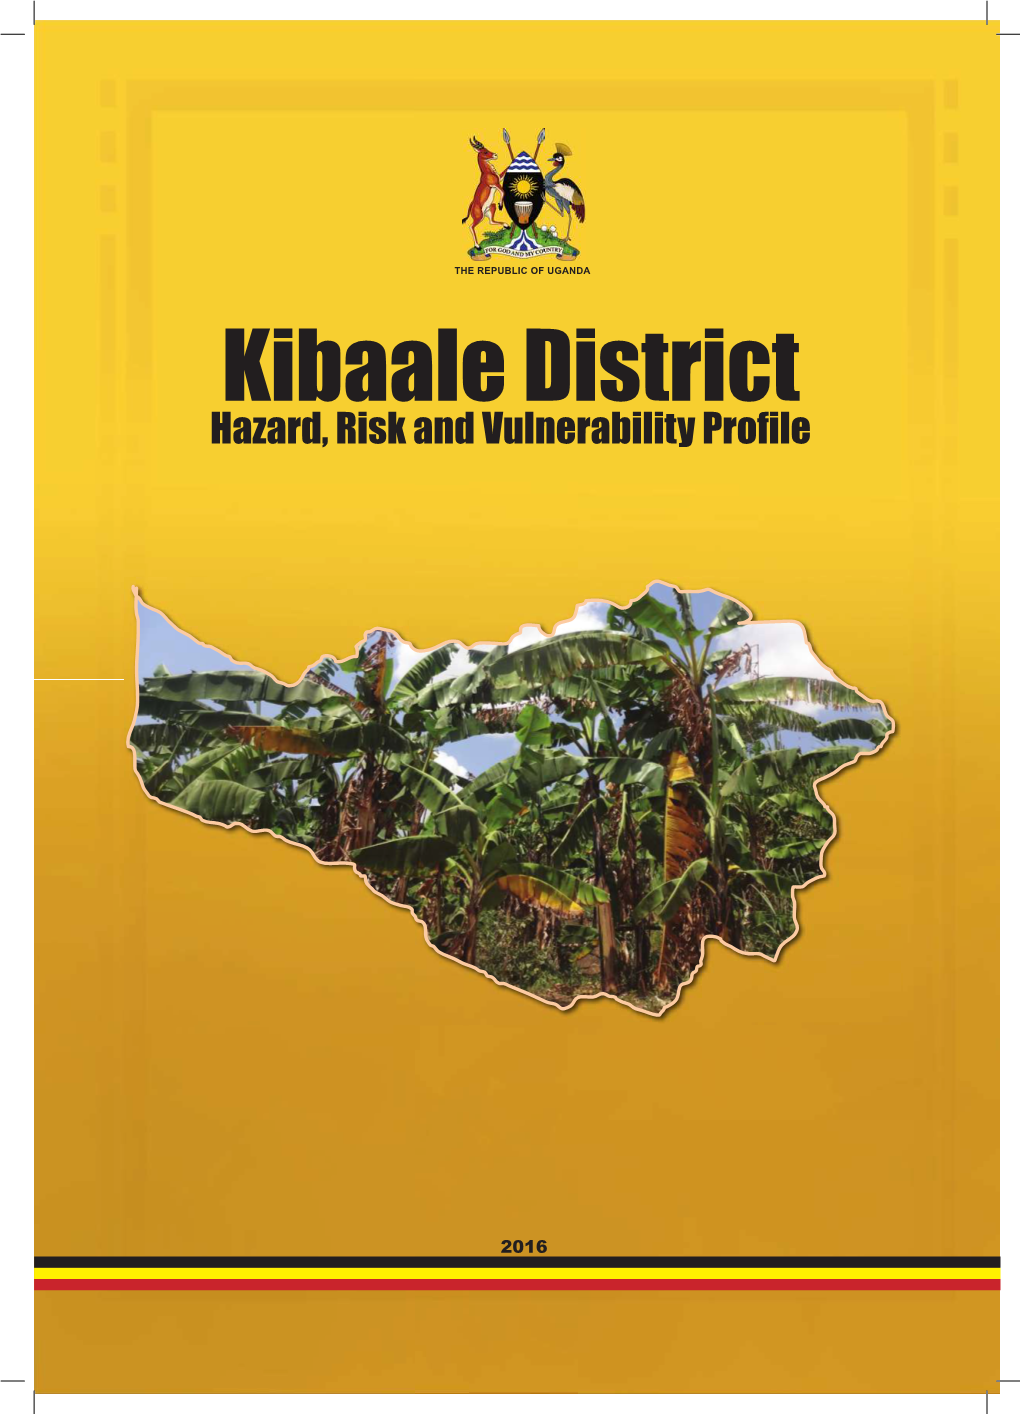 Kibaale District HRV Profile.Pdf